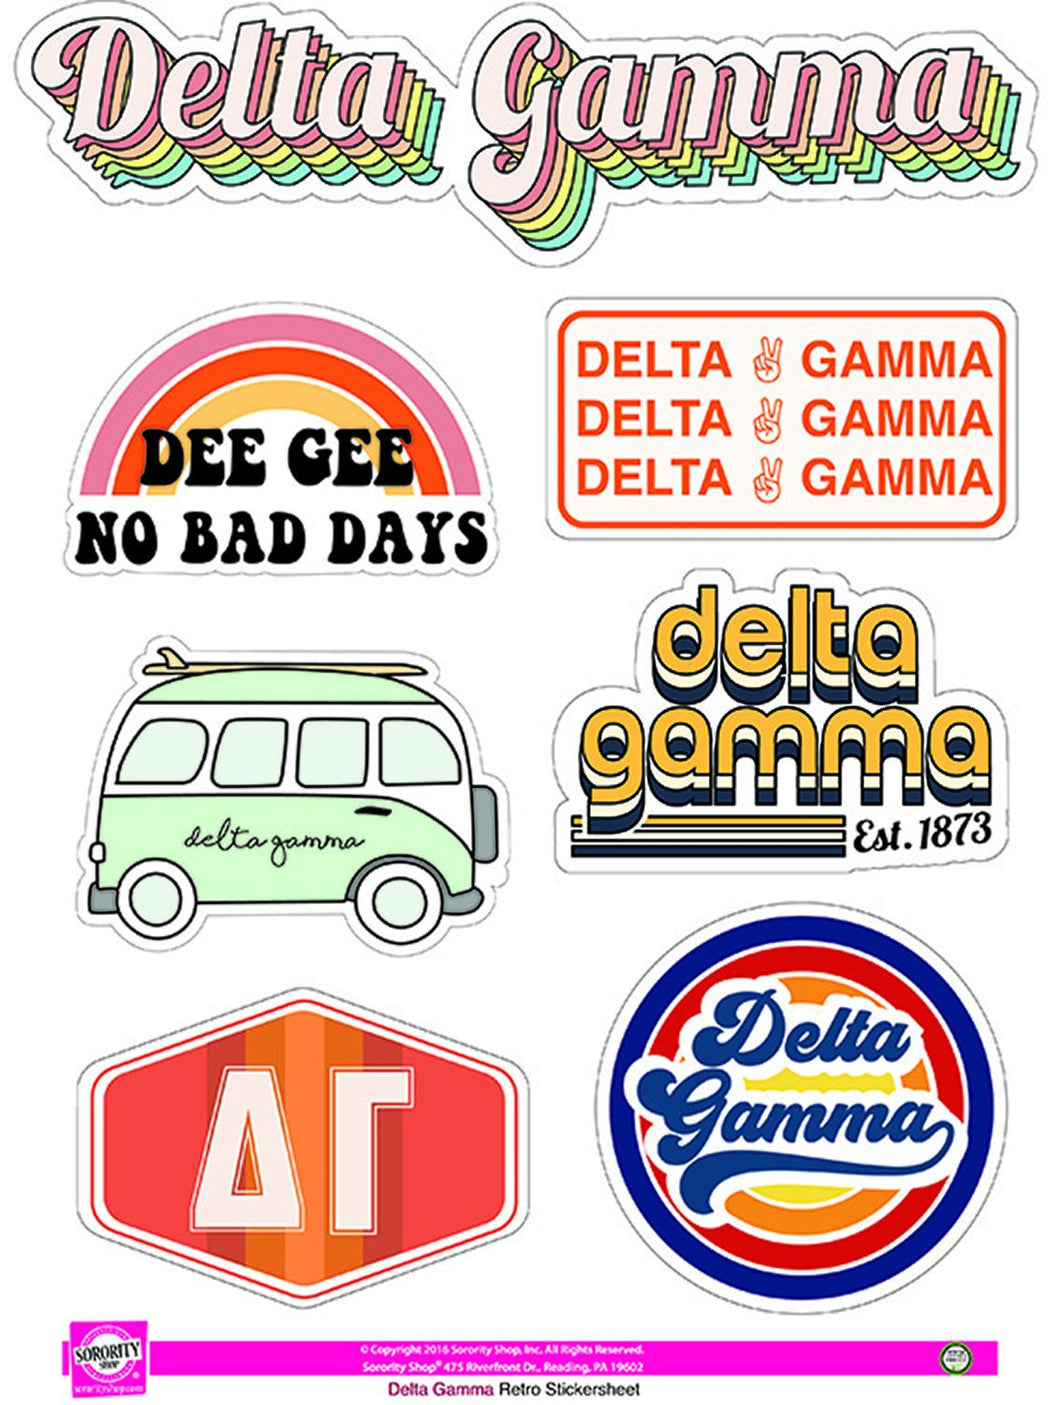 Retro Sticker Sheet - Delta Gamma